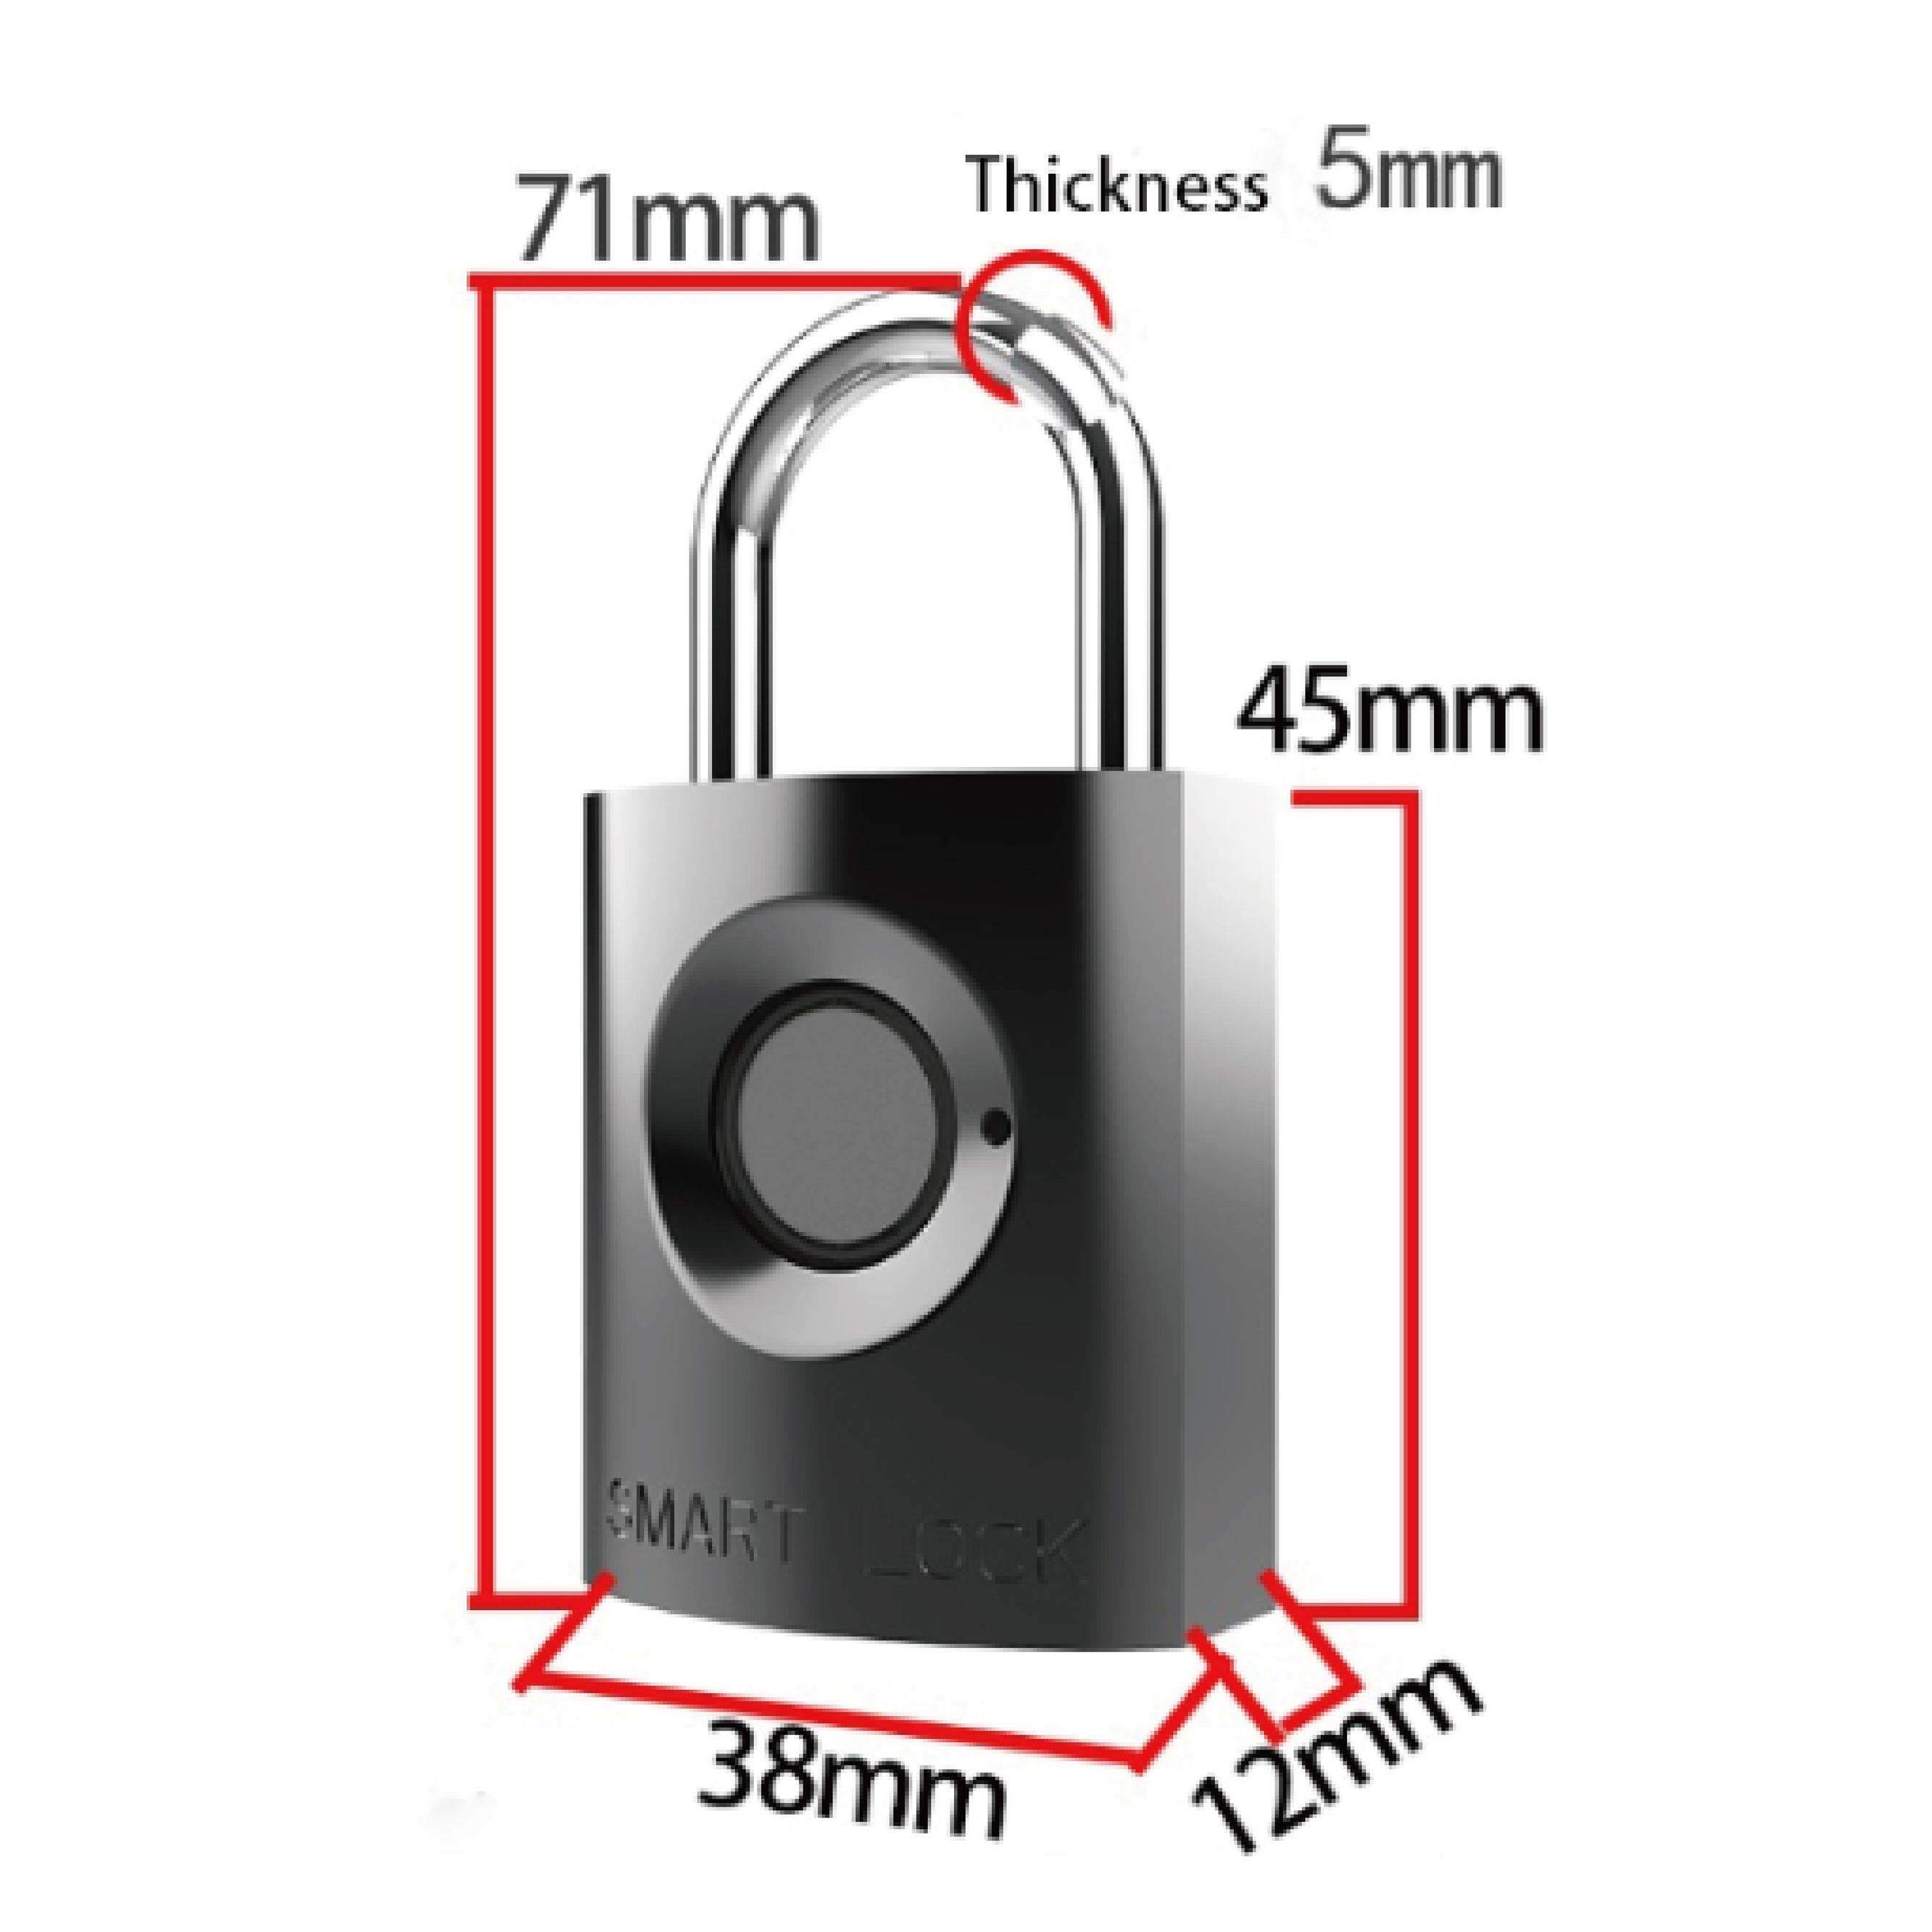 Smart Digital Alarm Fingerprint Pad lock GW8265